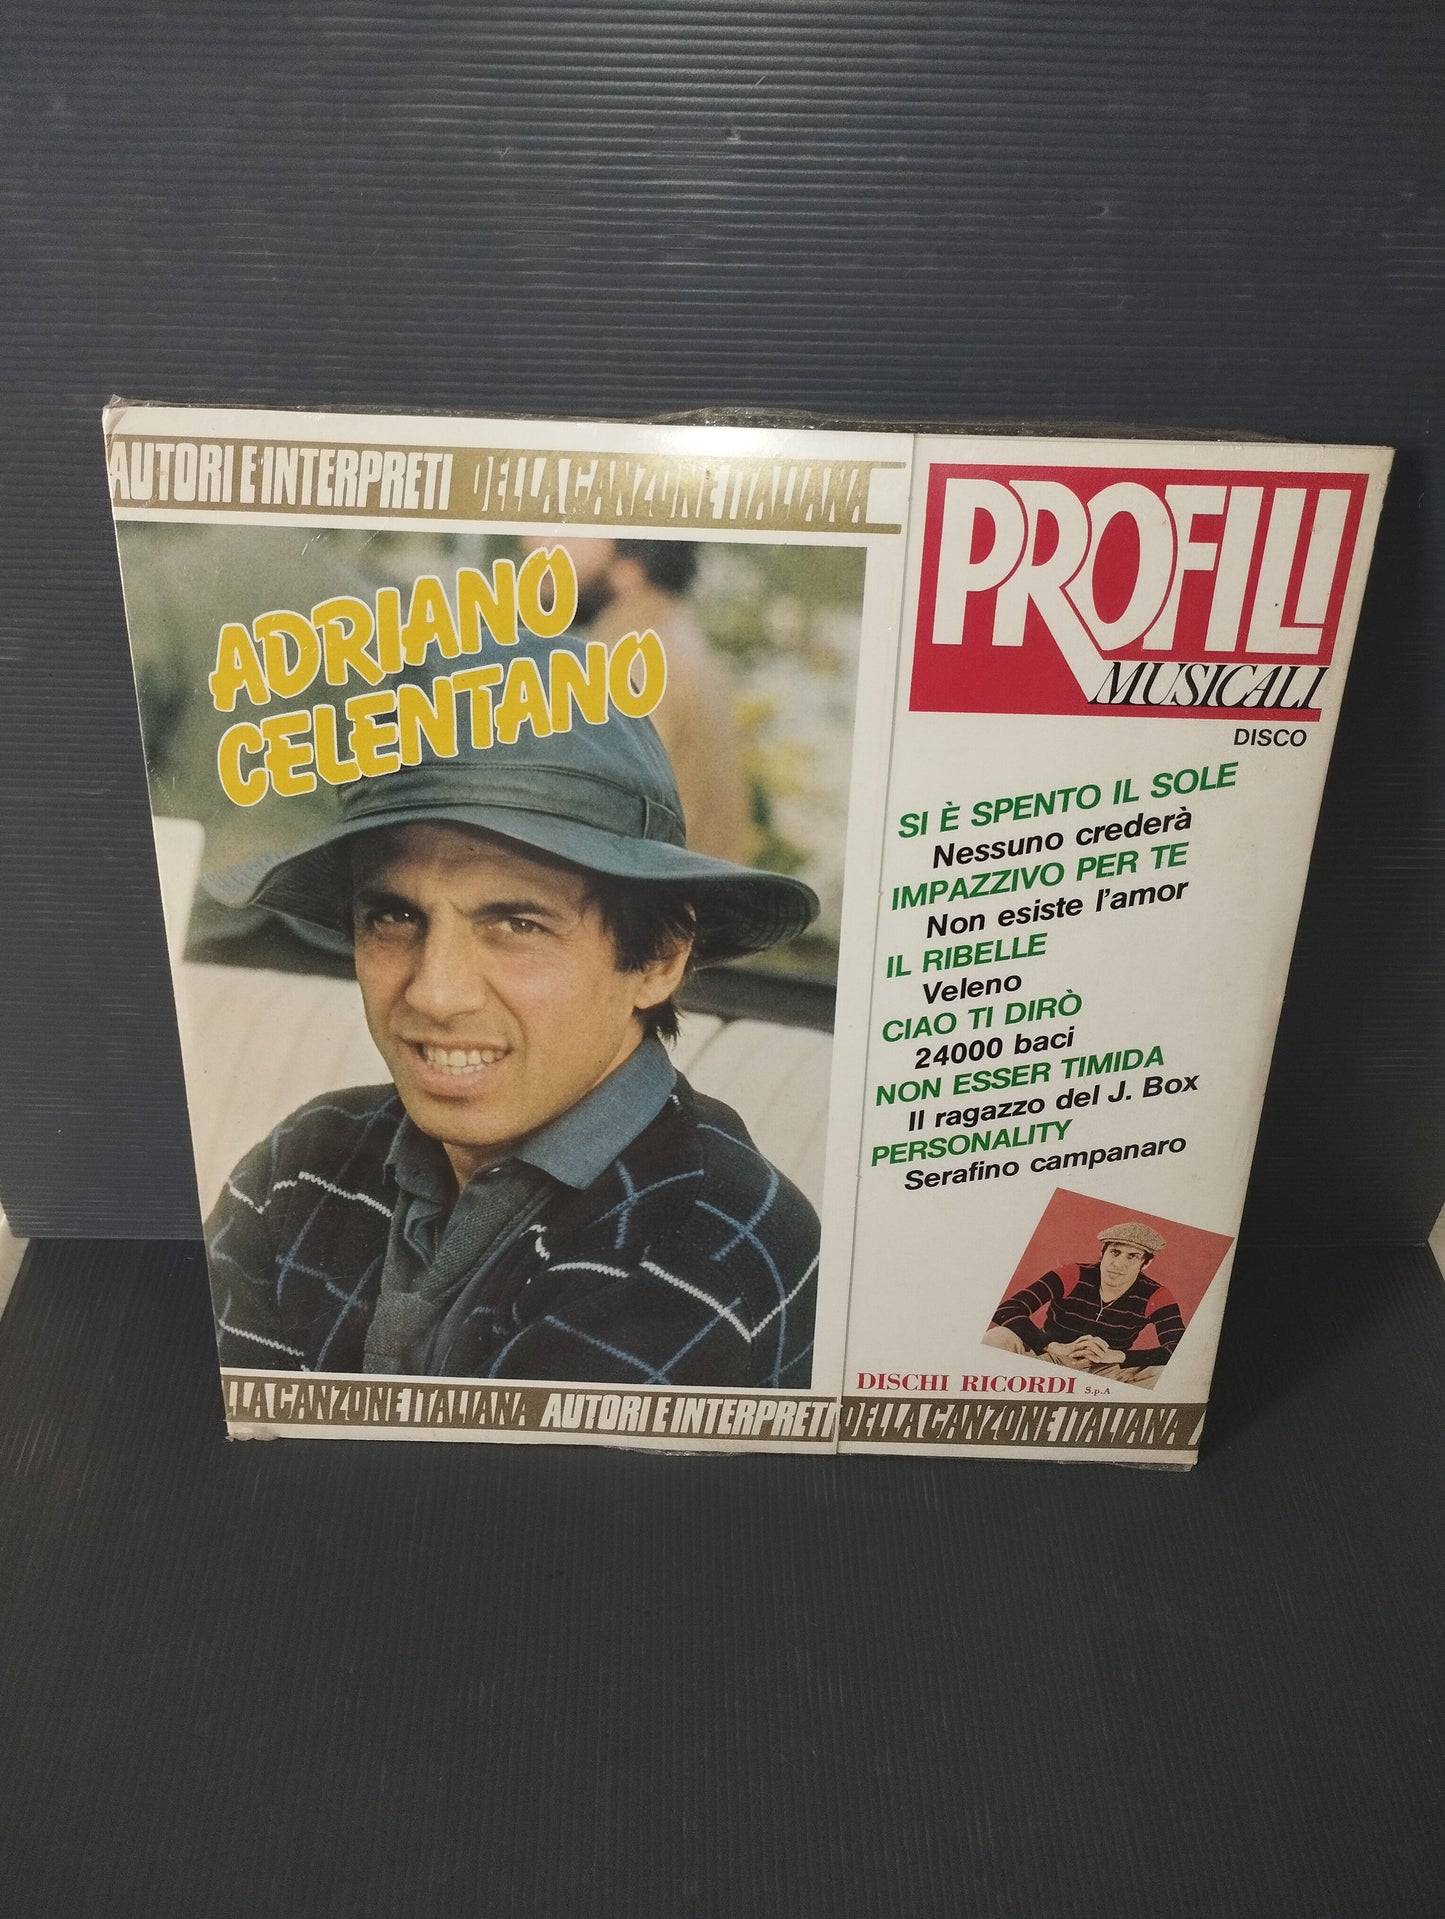 Adriano Celentano Musical profiles 33 rpm lp